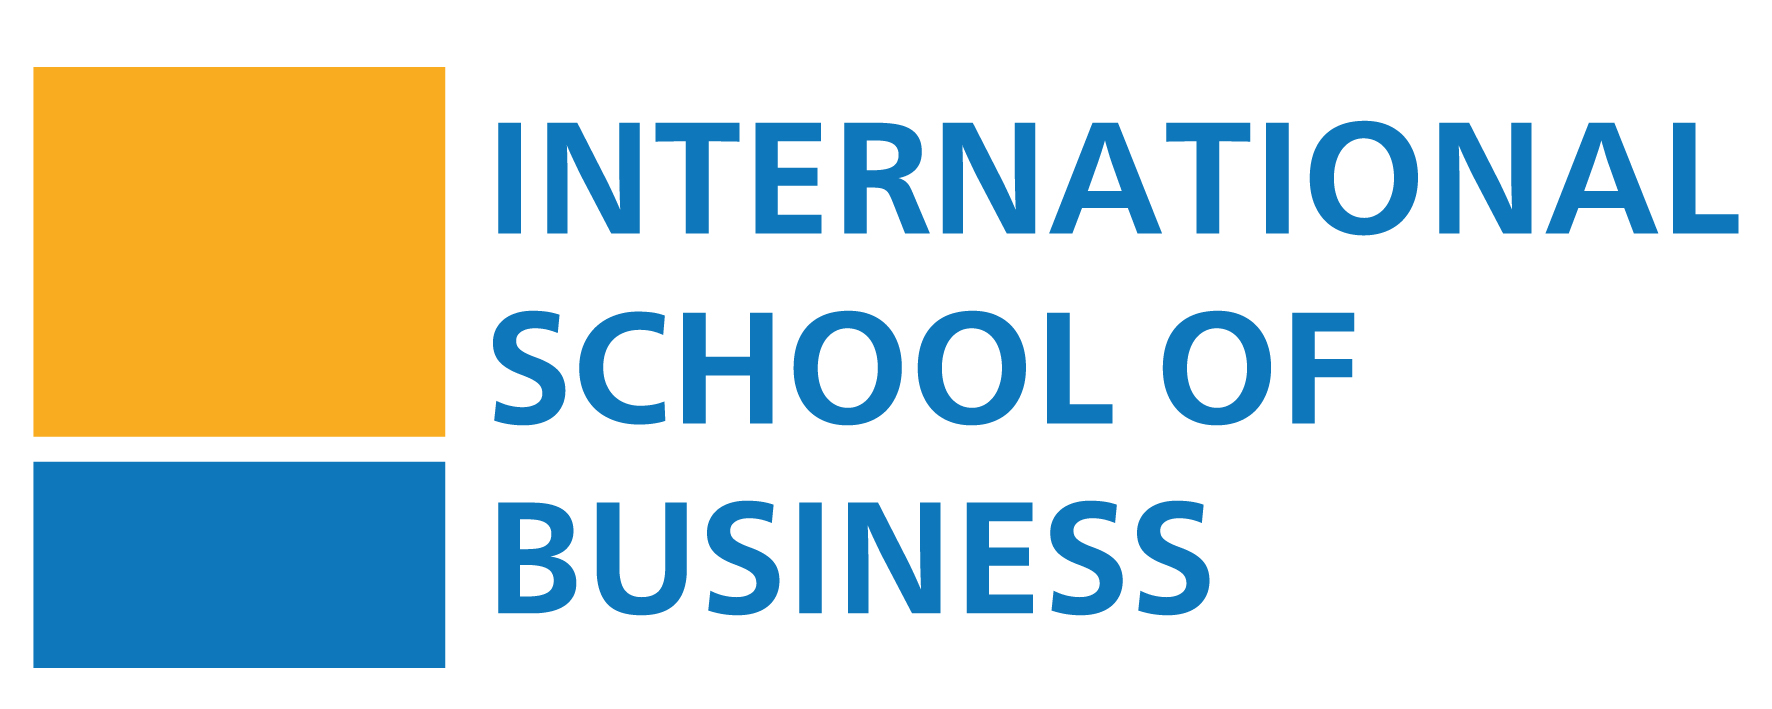 International School of Business Moodle